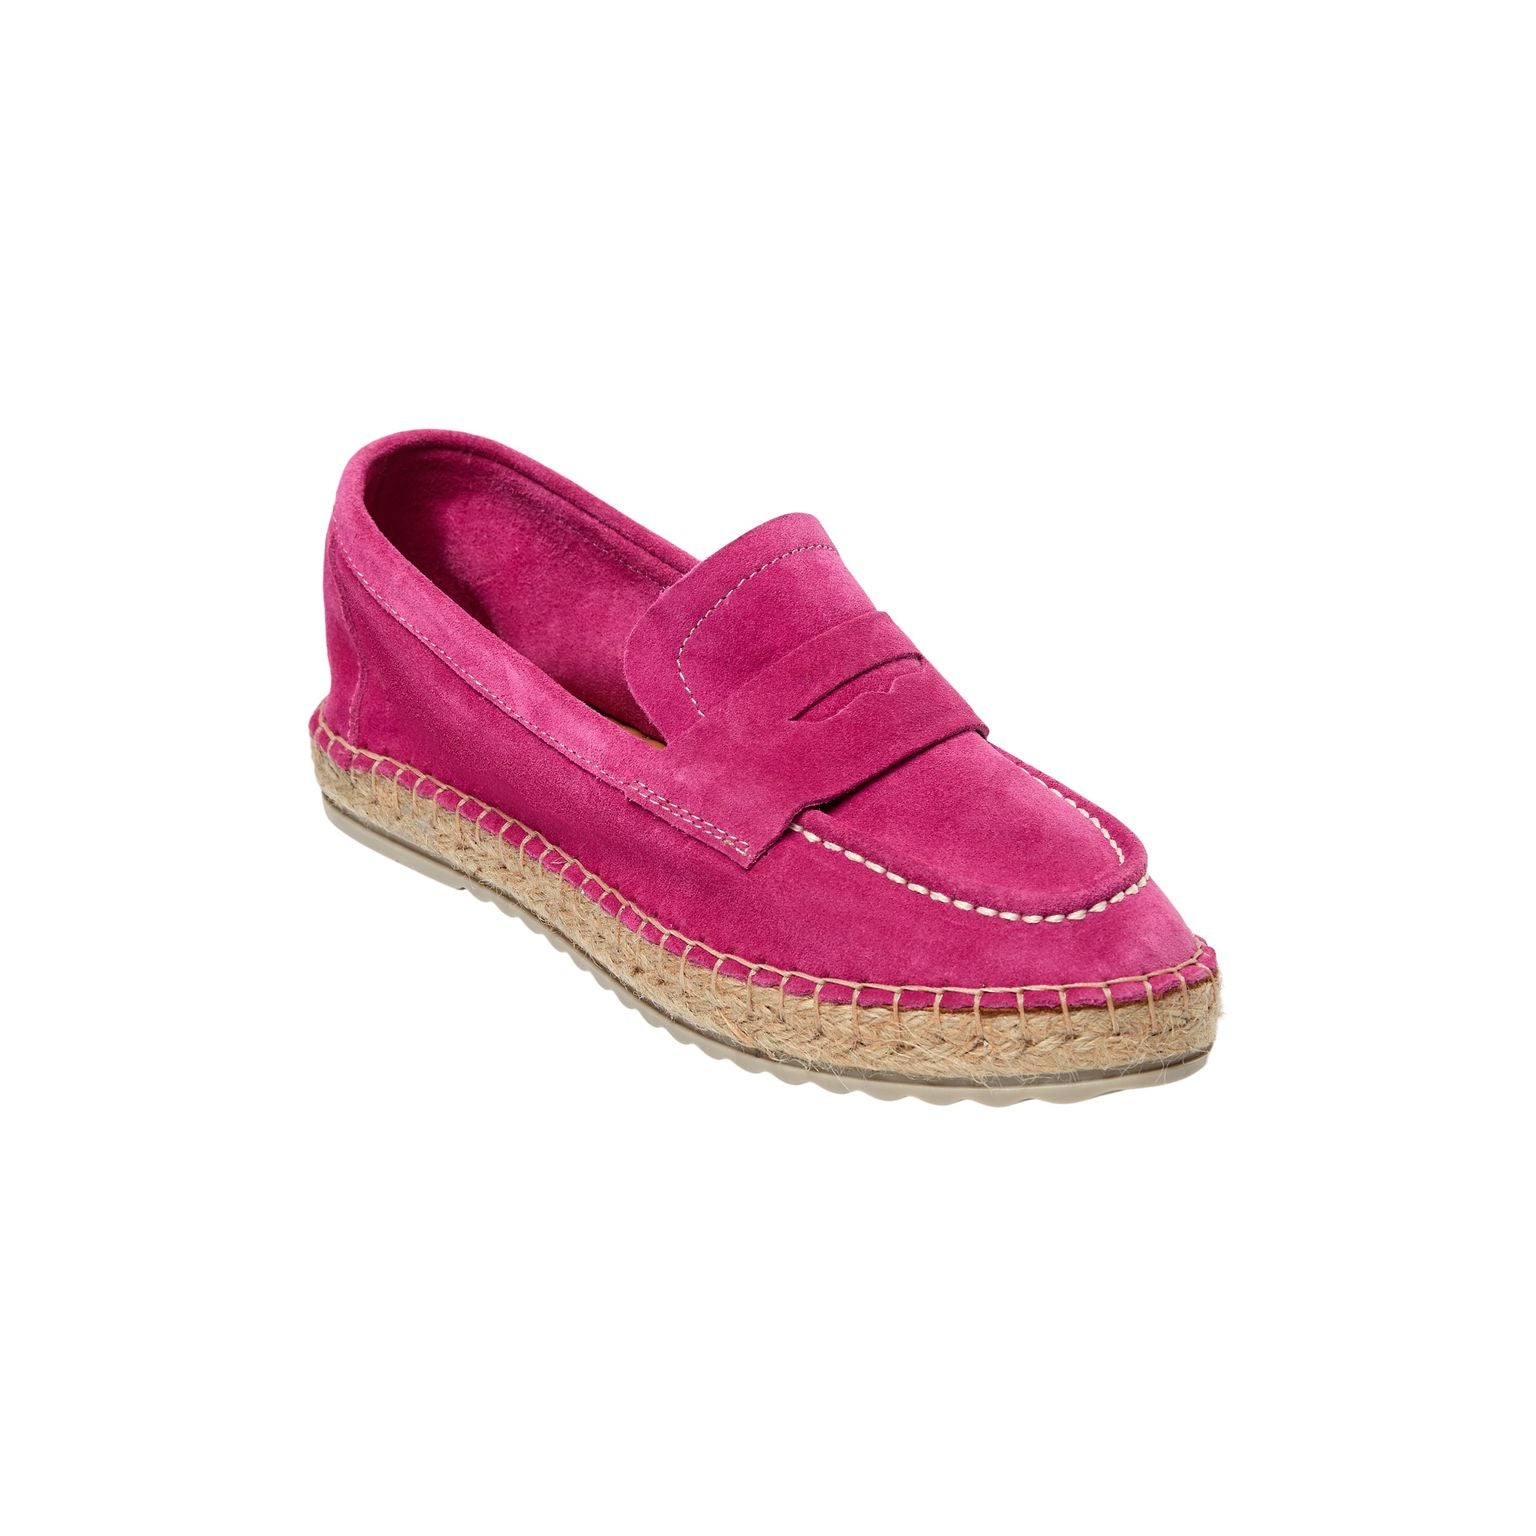 Schnoor - Loafer, Pink Suede